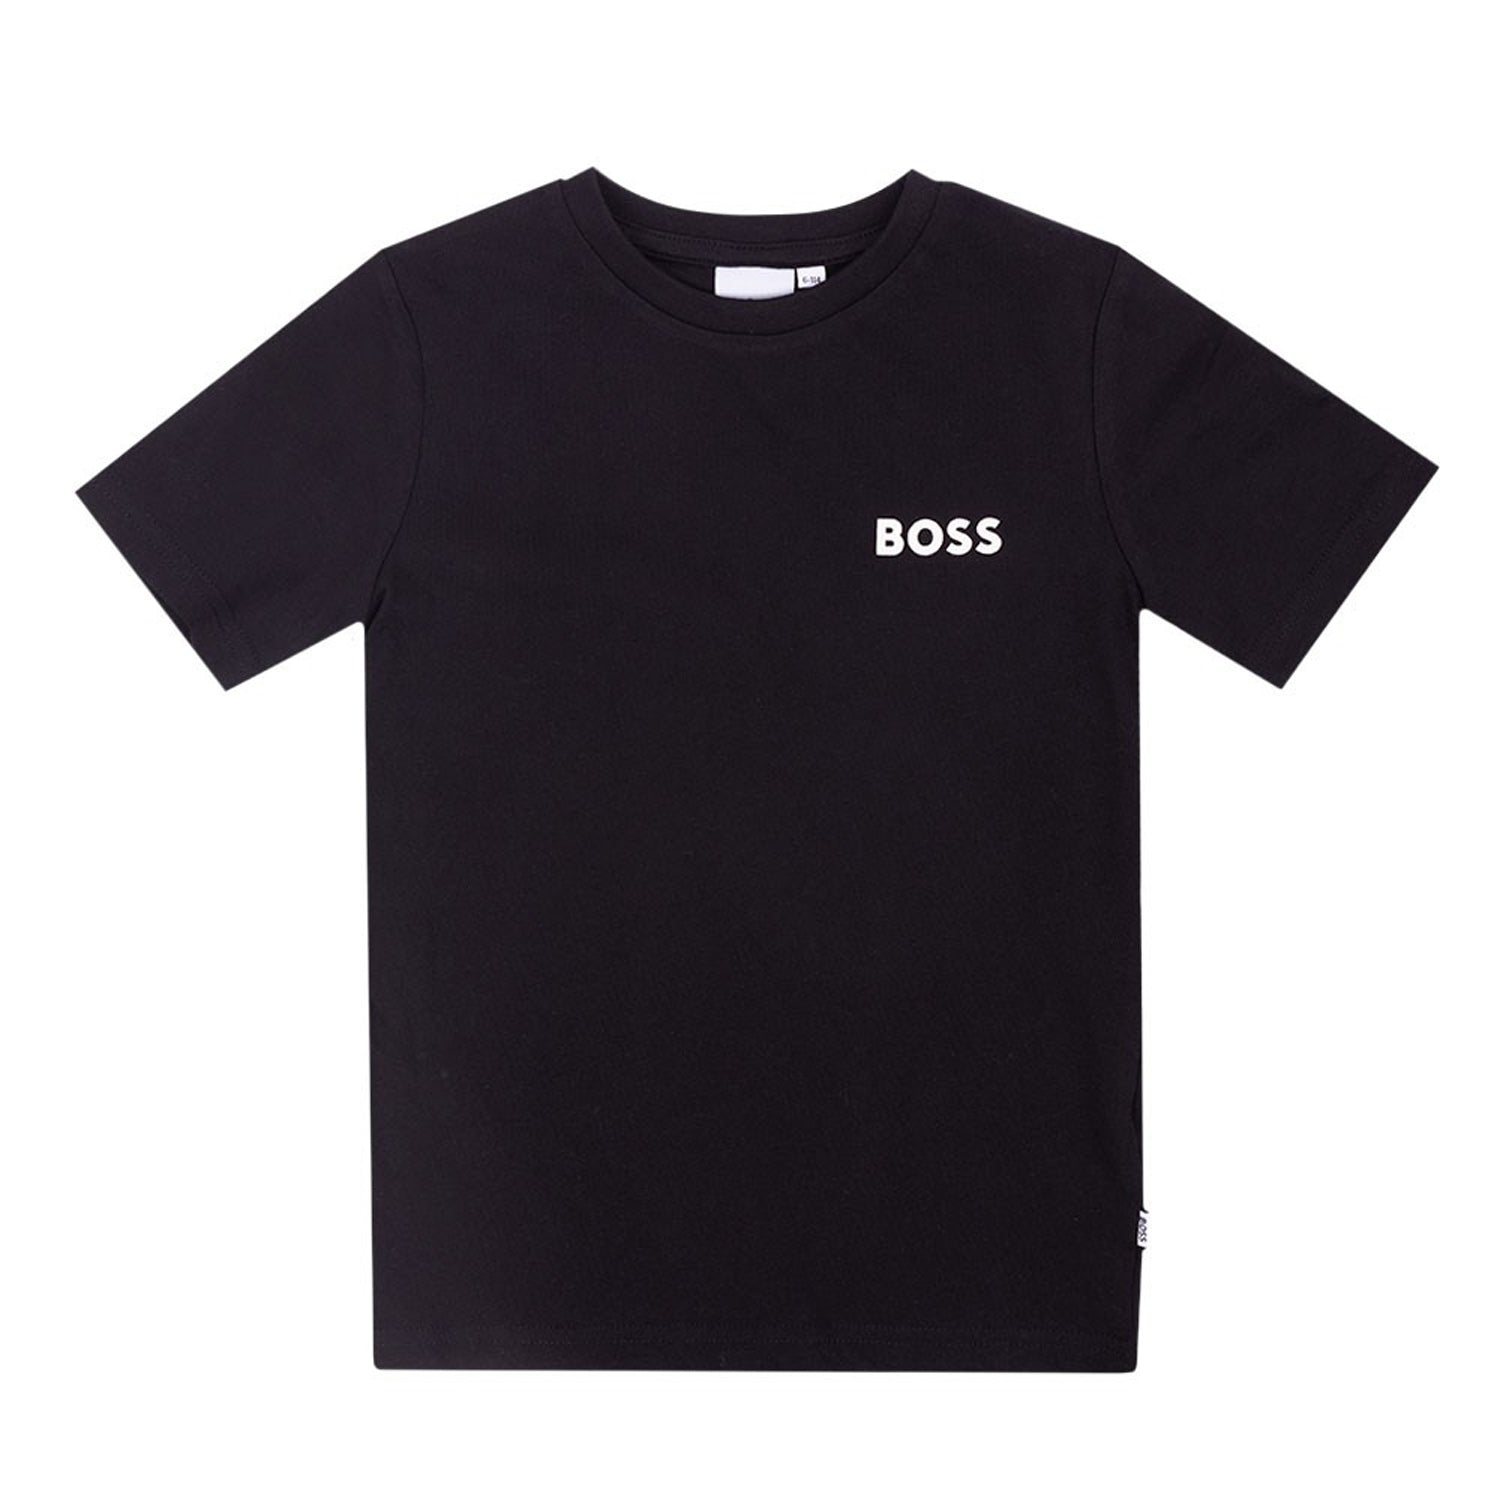 Boss T Shirt J25o74 Black Preto_shot1